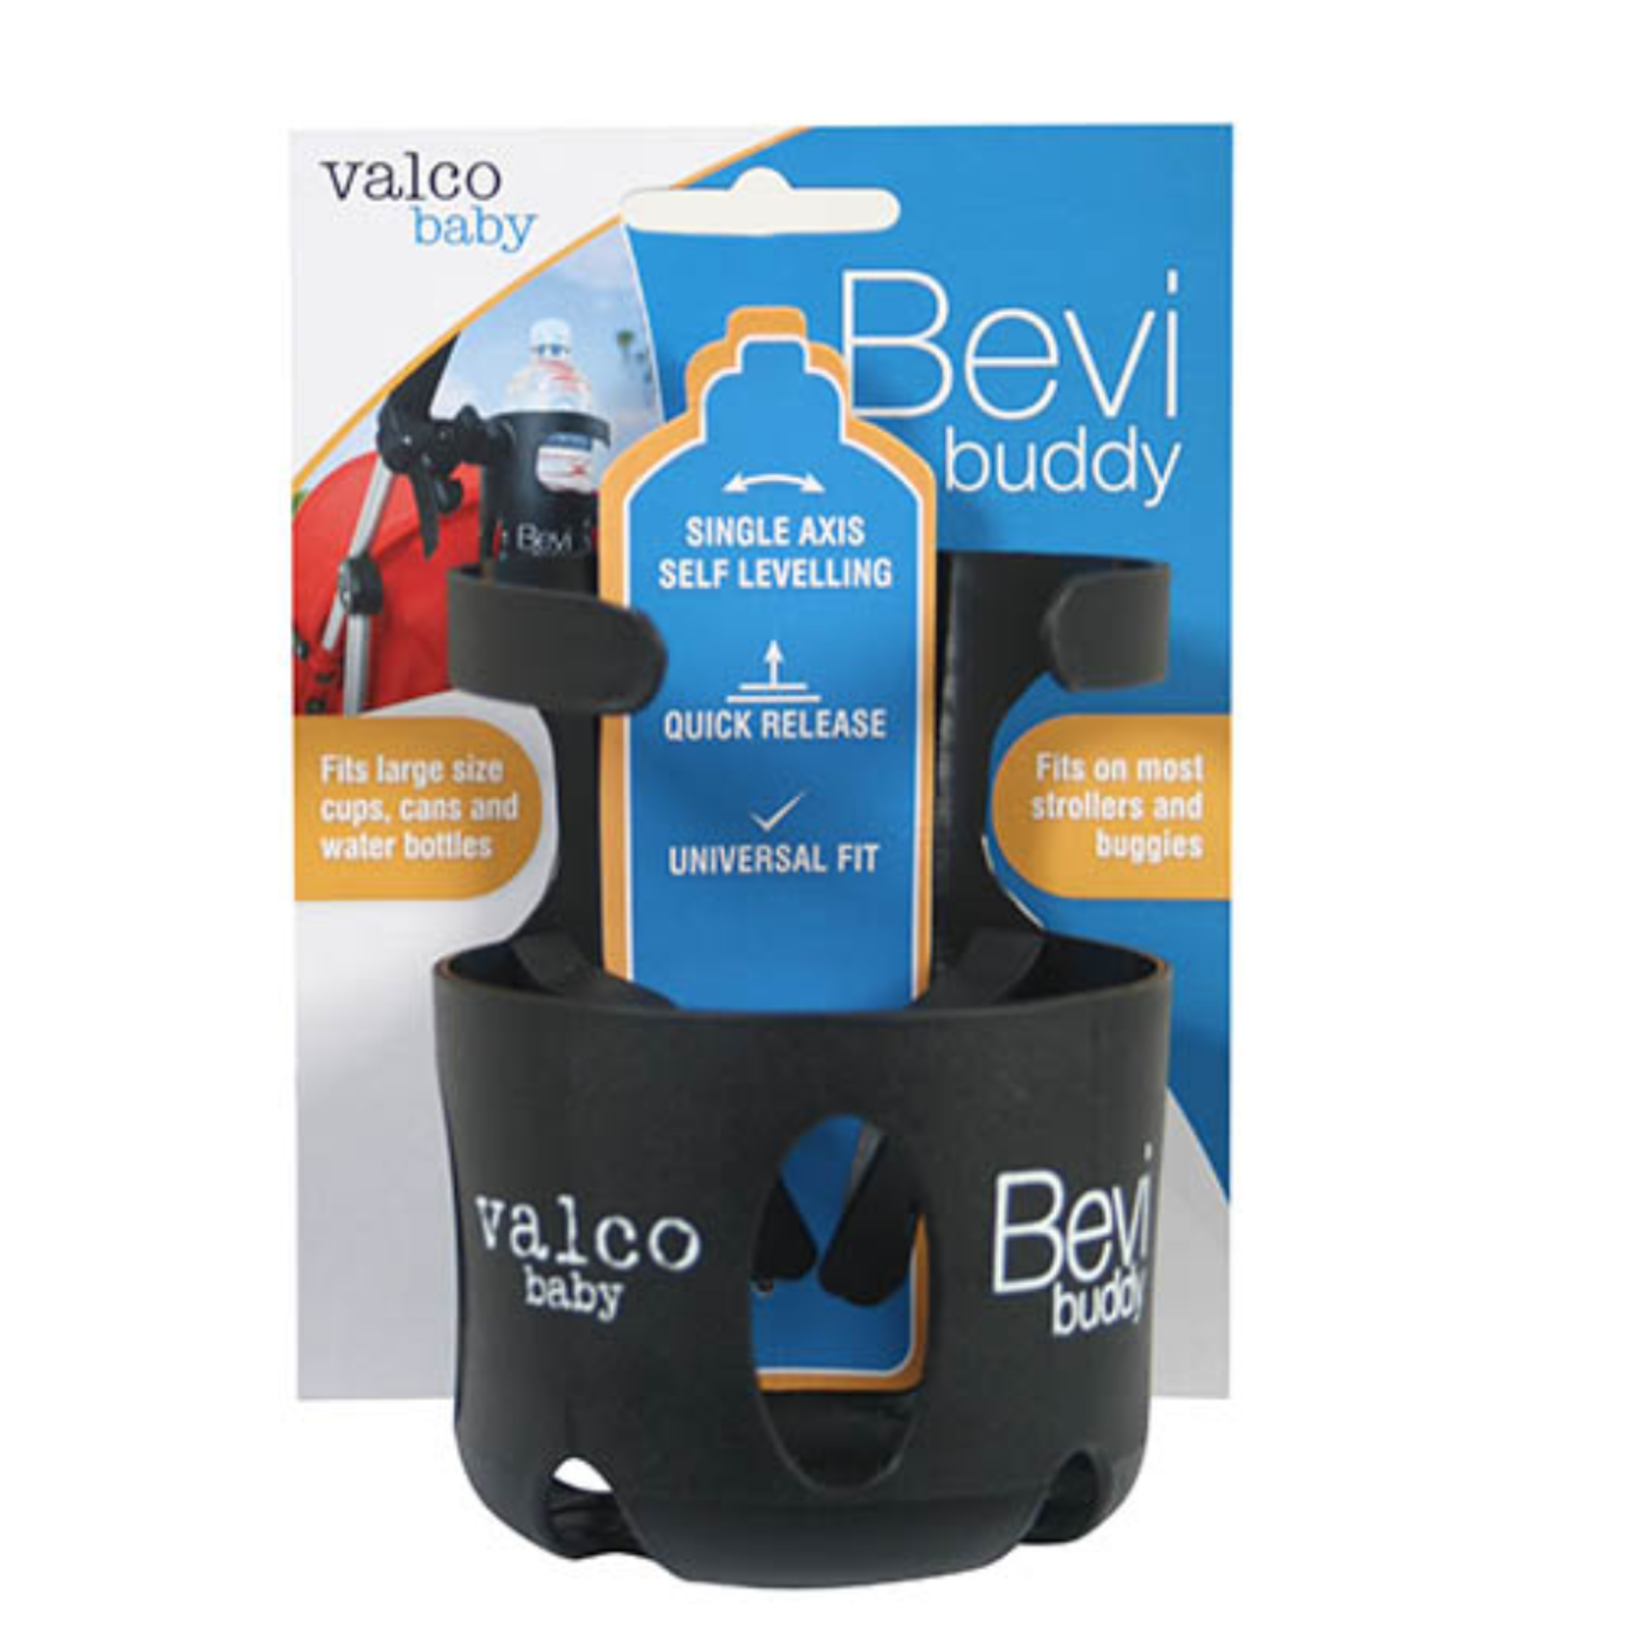 Valco Baby Bevi Buddy(A8784)